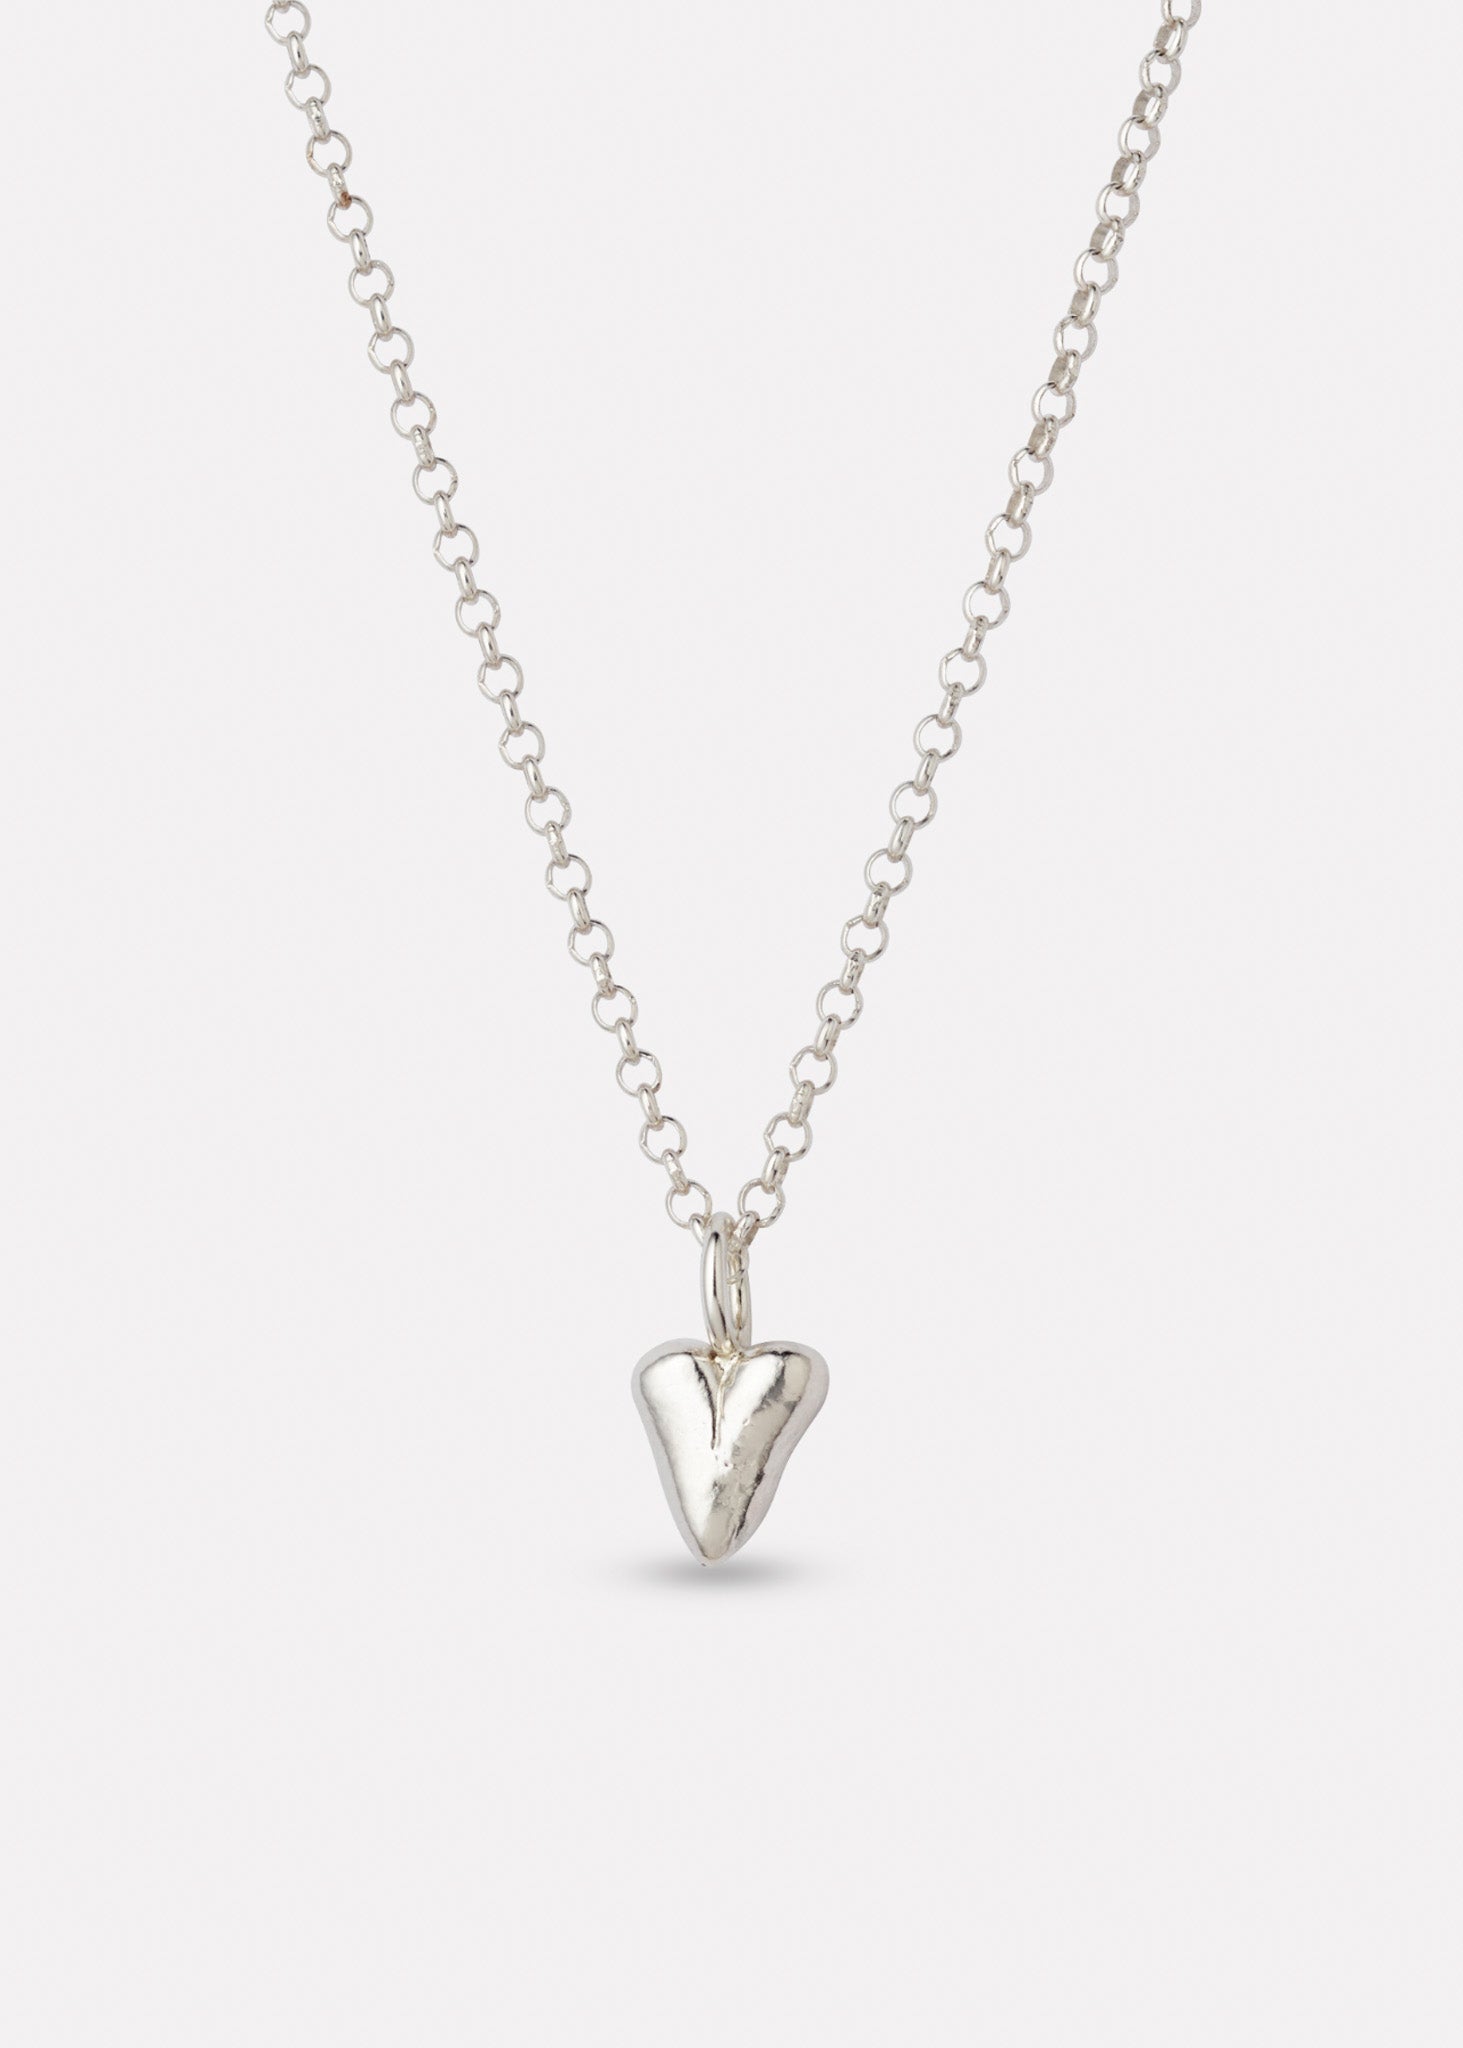 Mia heart pendant in silver with chain, small